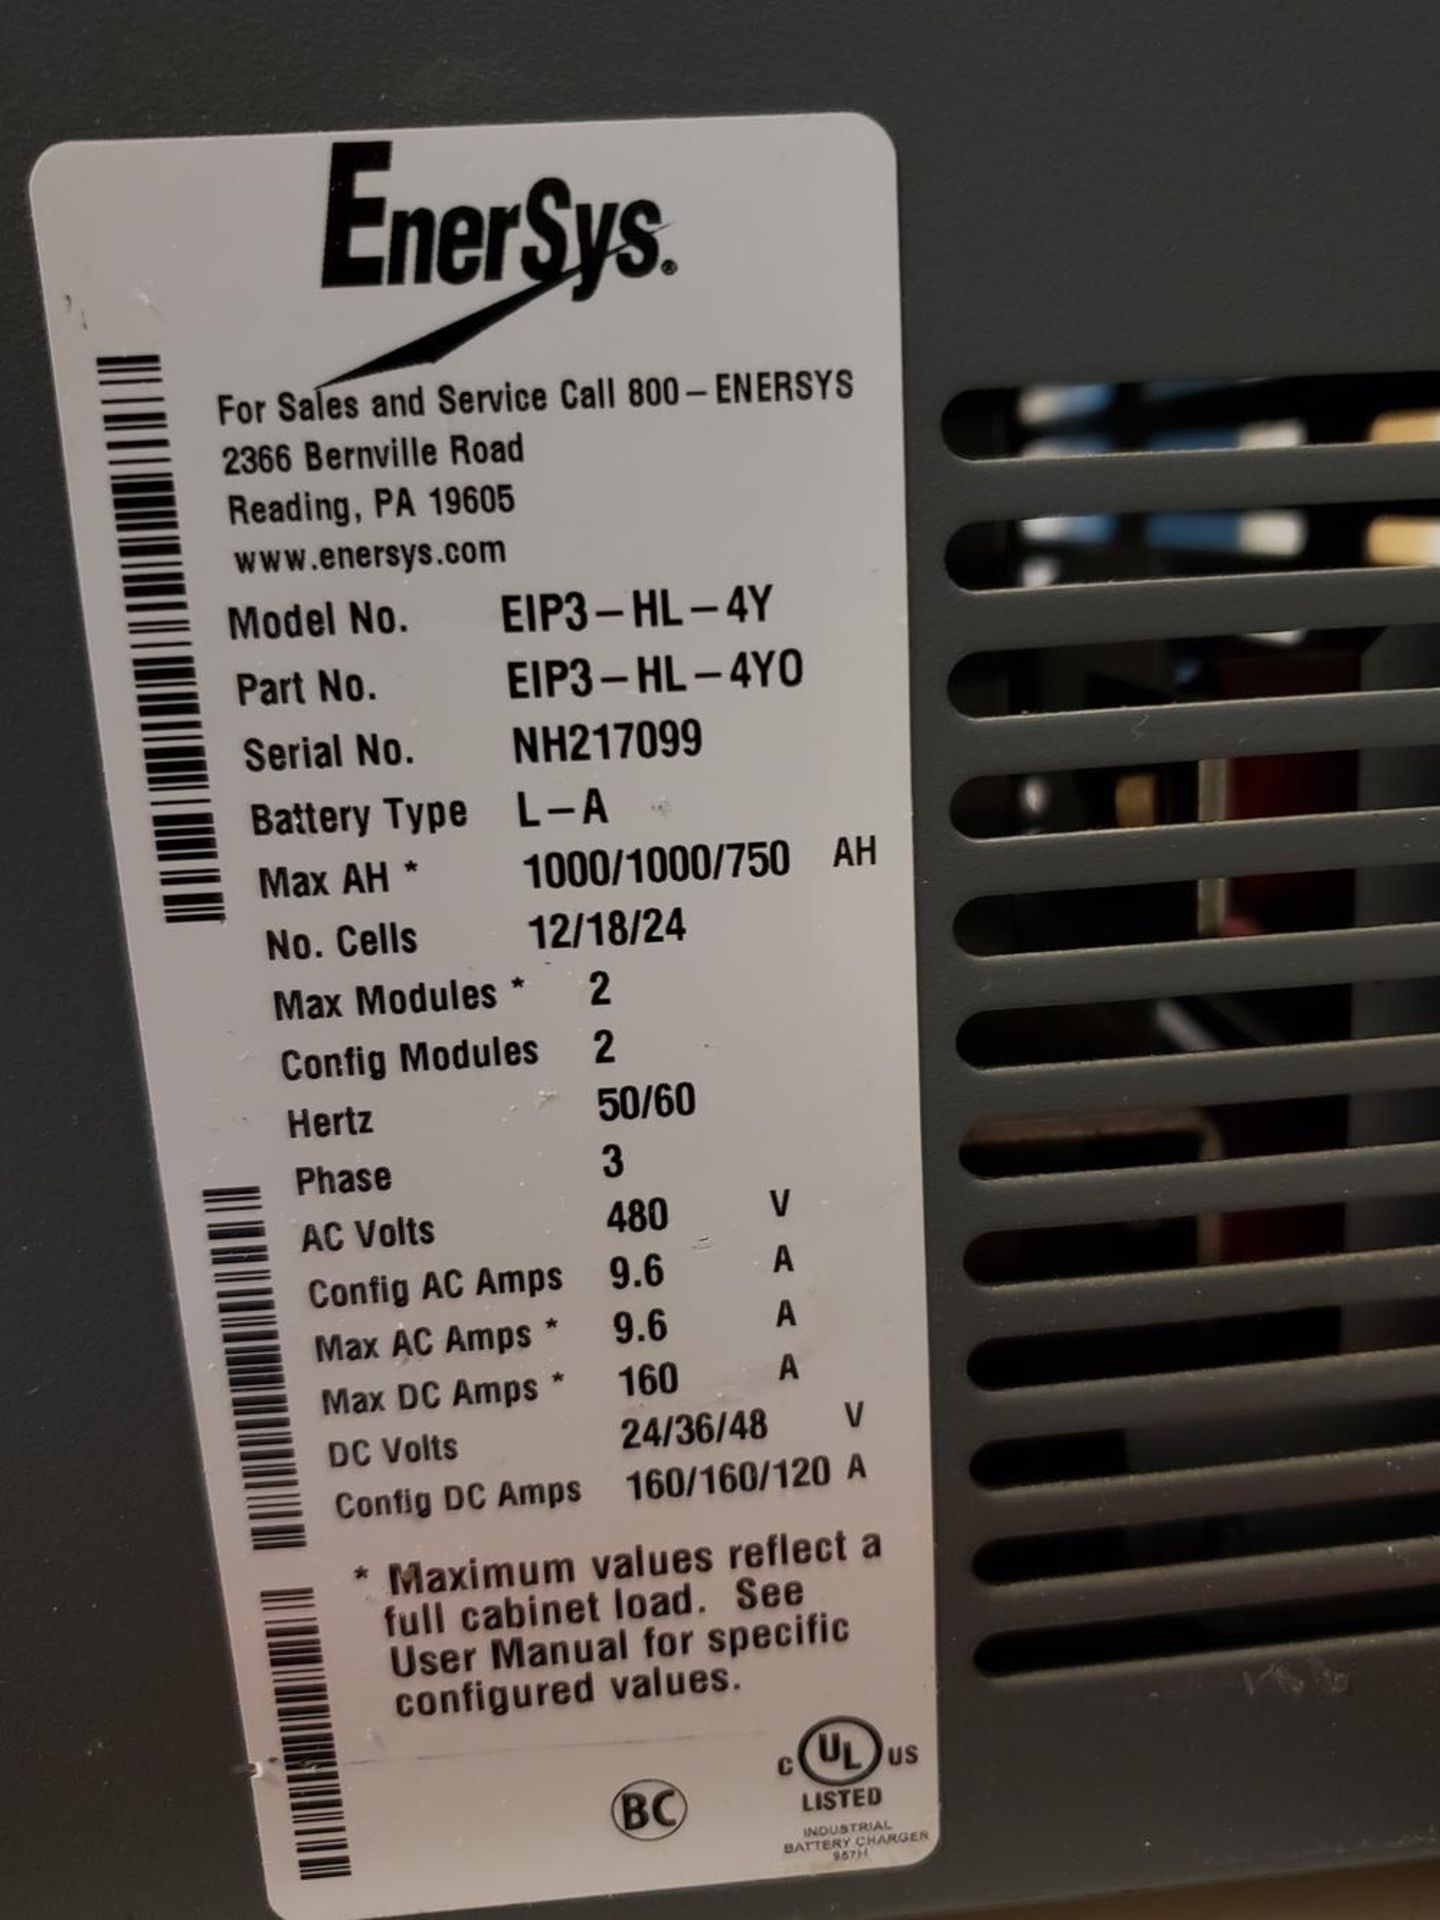 EnerSys EnForcer Impaq+ Battery Charger, 24/36/48 Volt, M# EIP3-HL-4Y, S/N NH21709 | Rig Fee: $50 - Image 2 of 2